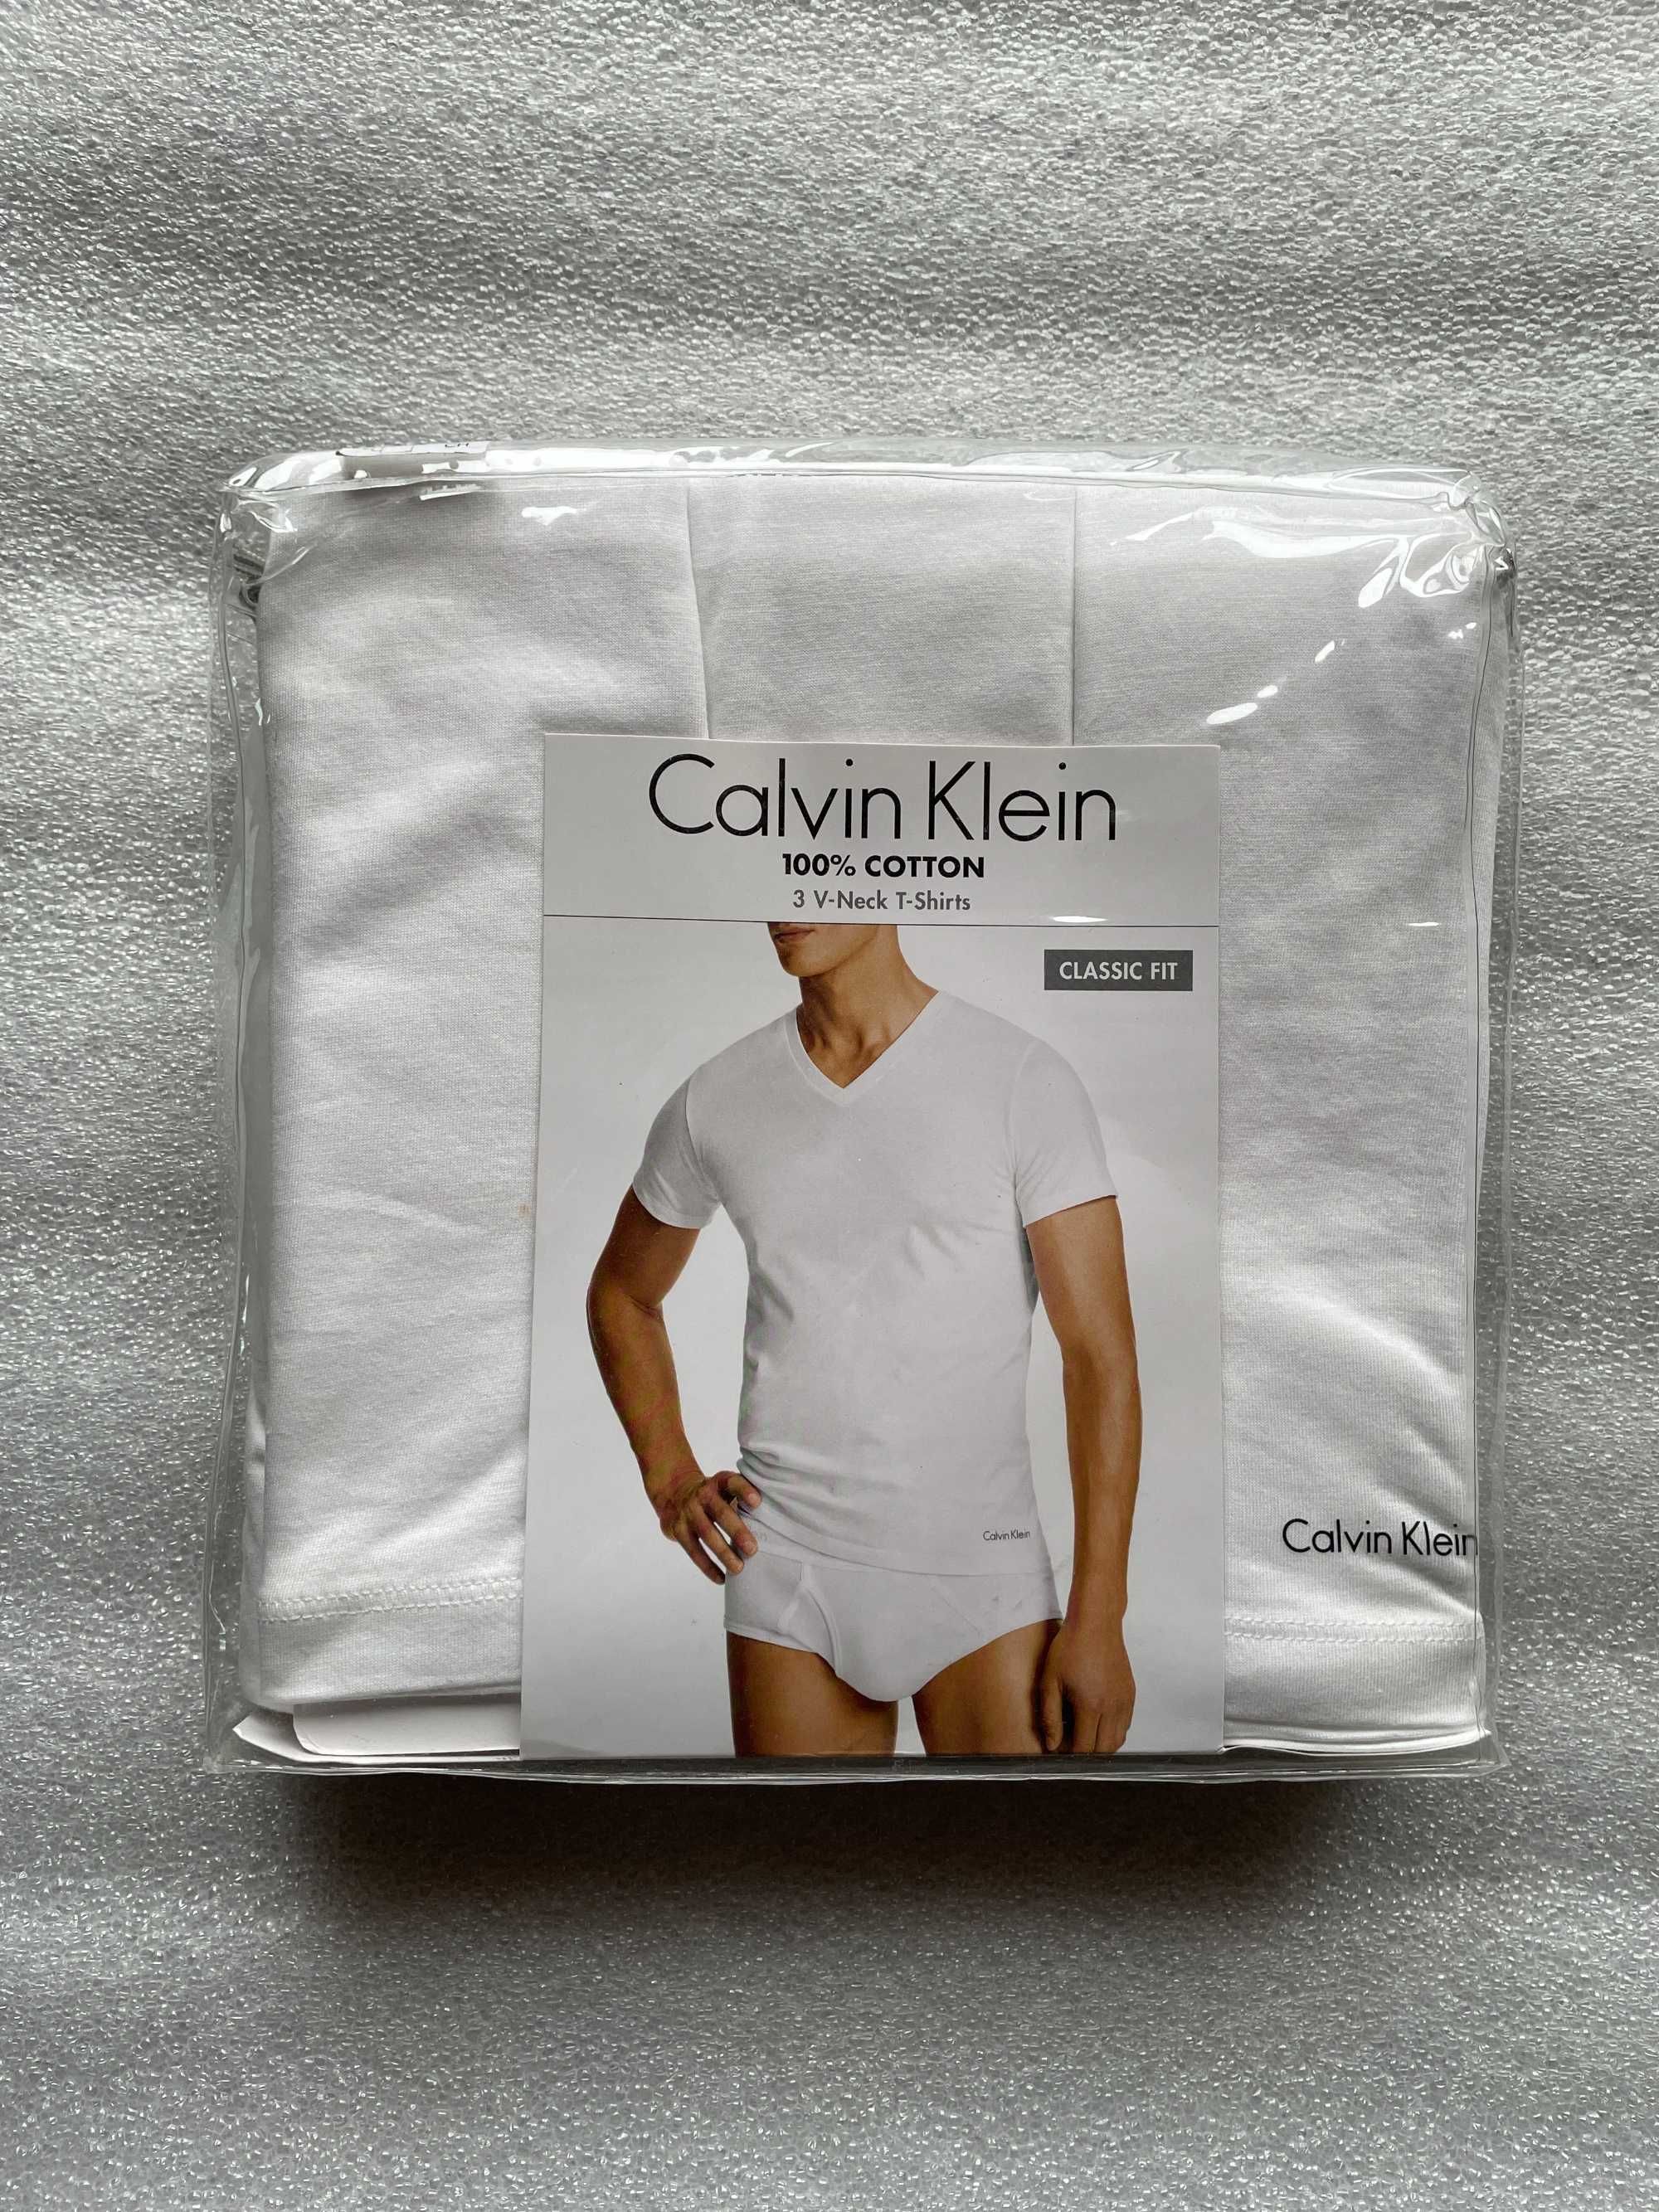 Новый набор calvin klein футболки (ck 3-pack white) с Америки S